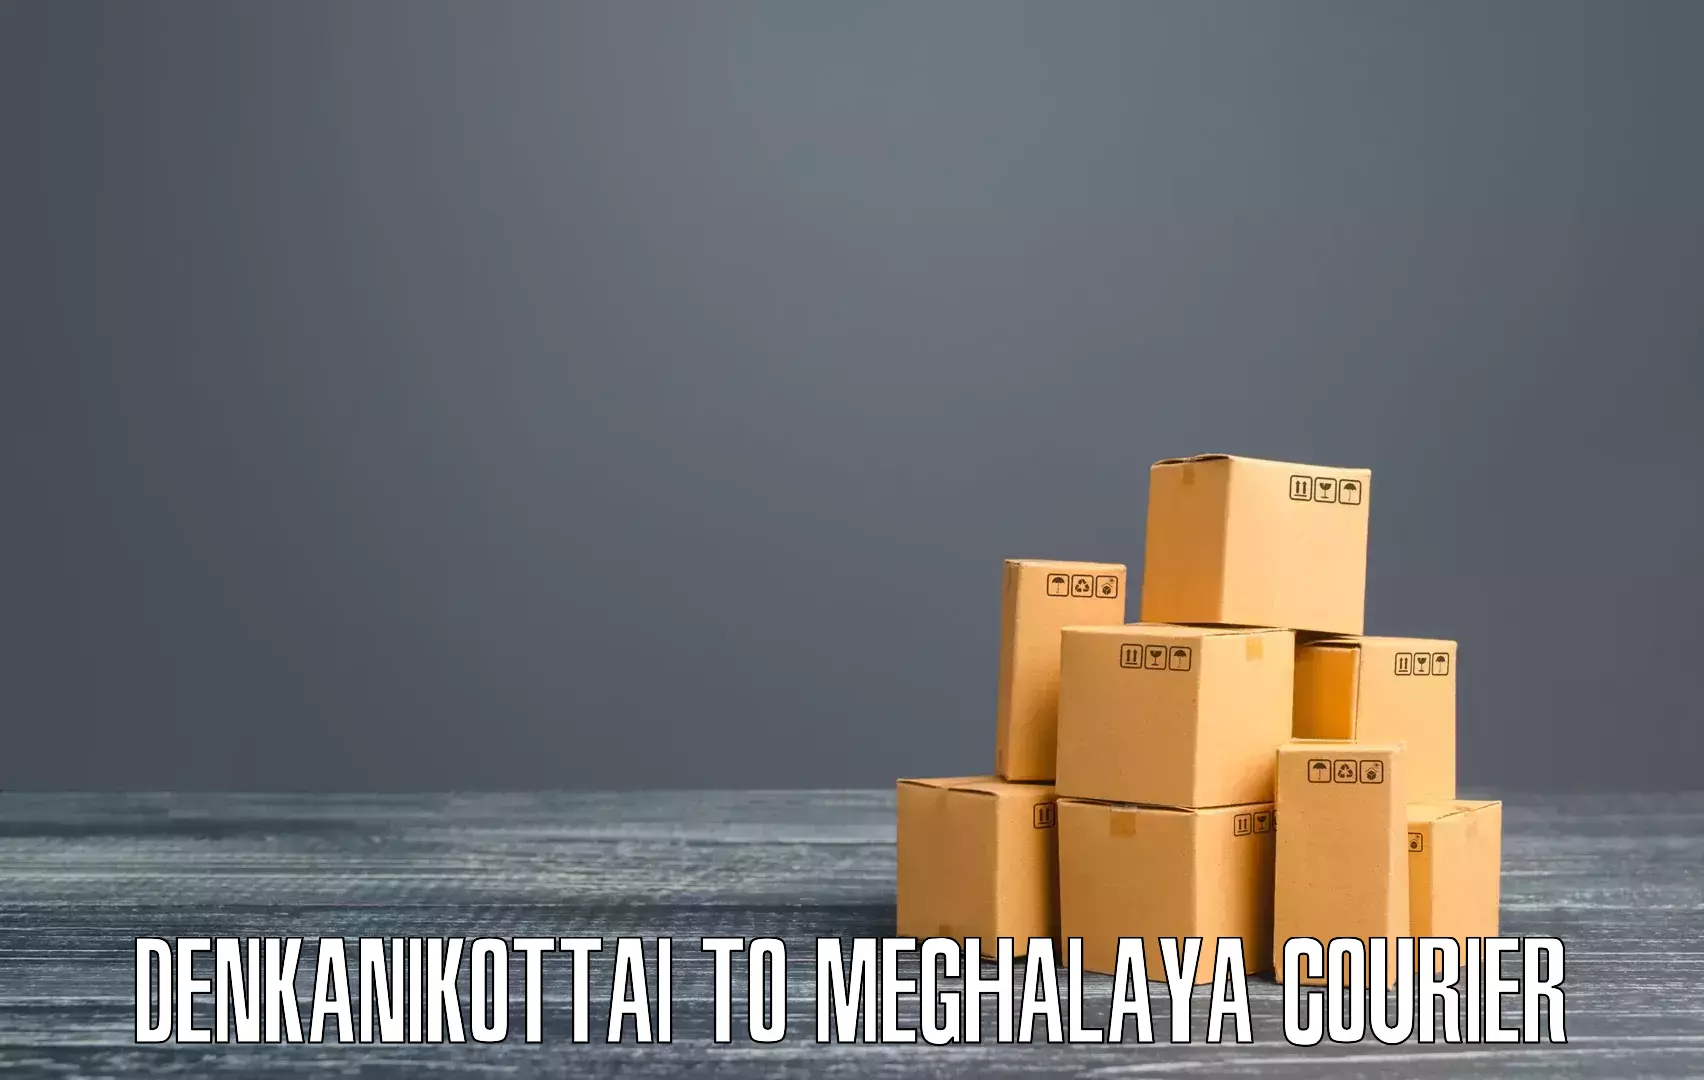 Full-service courier options Denkanikottai to Jowai